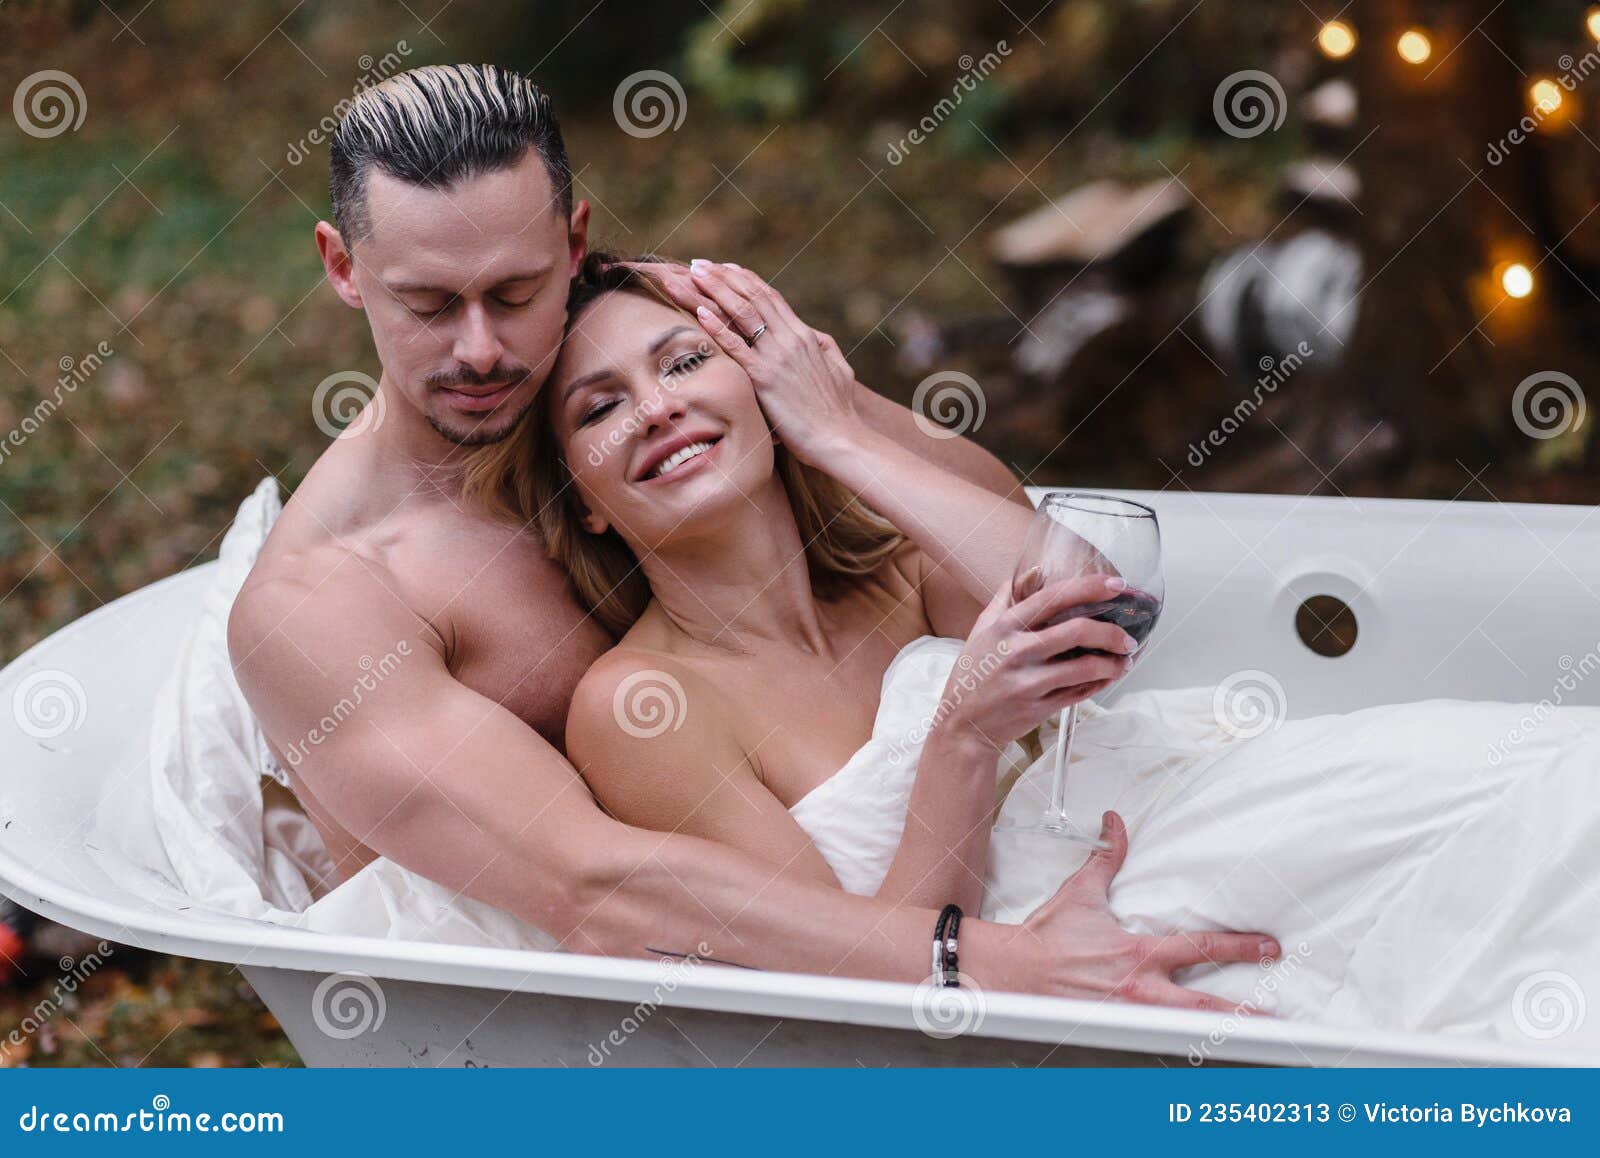 bonny freeman share kissing in the bathtub photos